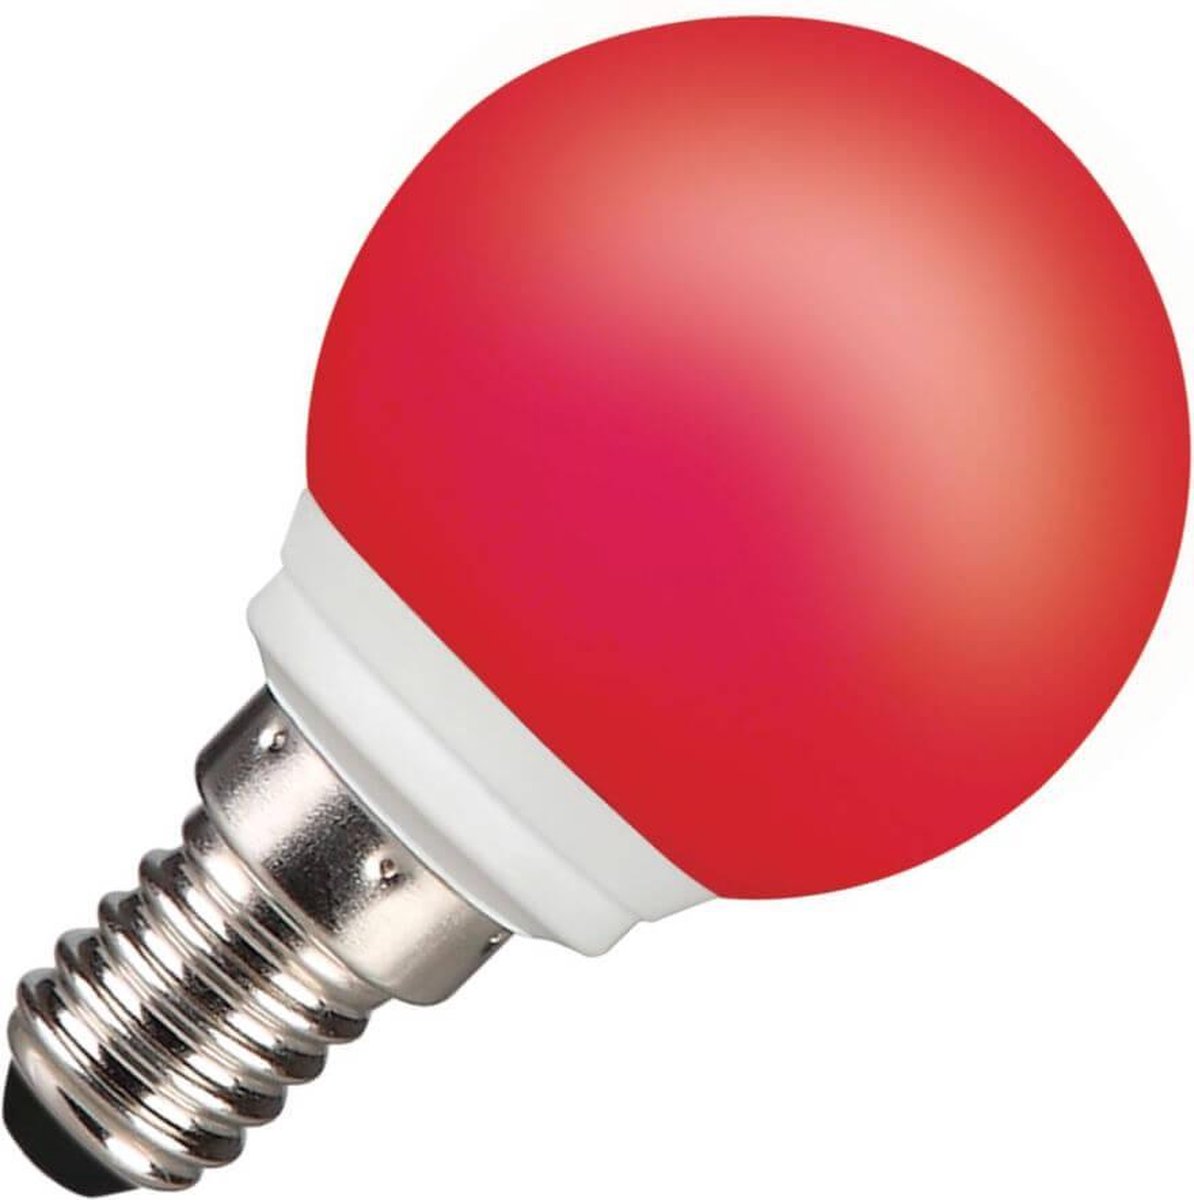 Destructief Begunstigde mannetje kogellamp LED rood 0.5W (vervangt 5W) kleine fitting E14 | bol.com